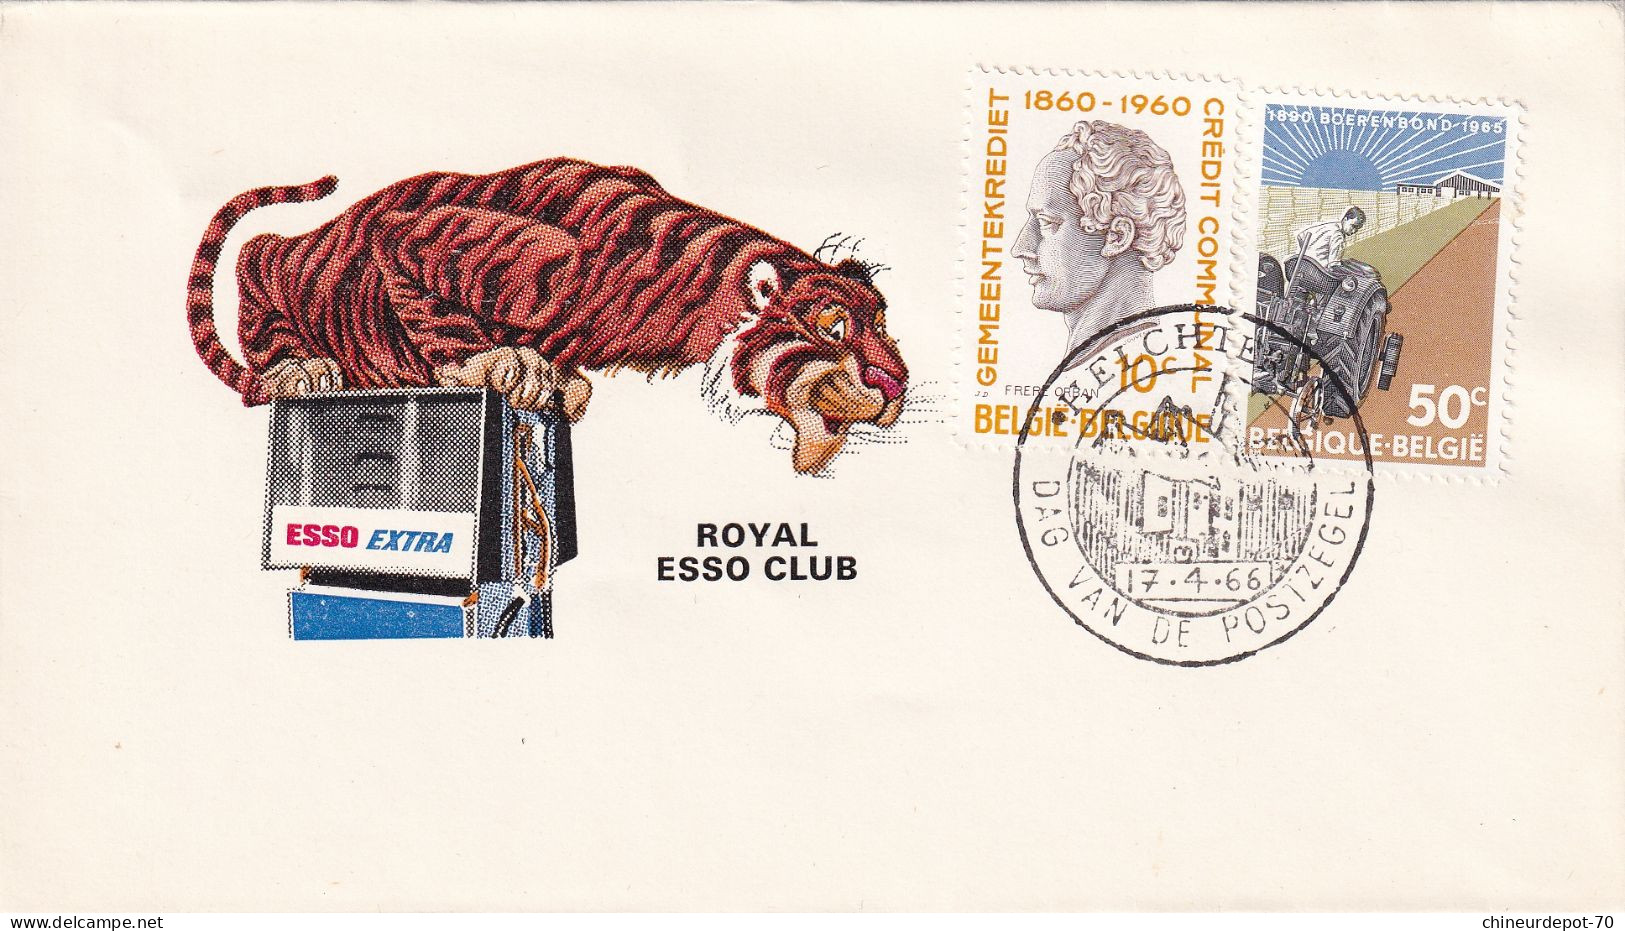 Royal Esso Club Belgique - Enveloppes